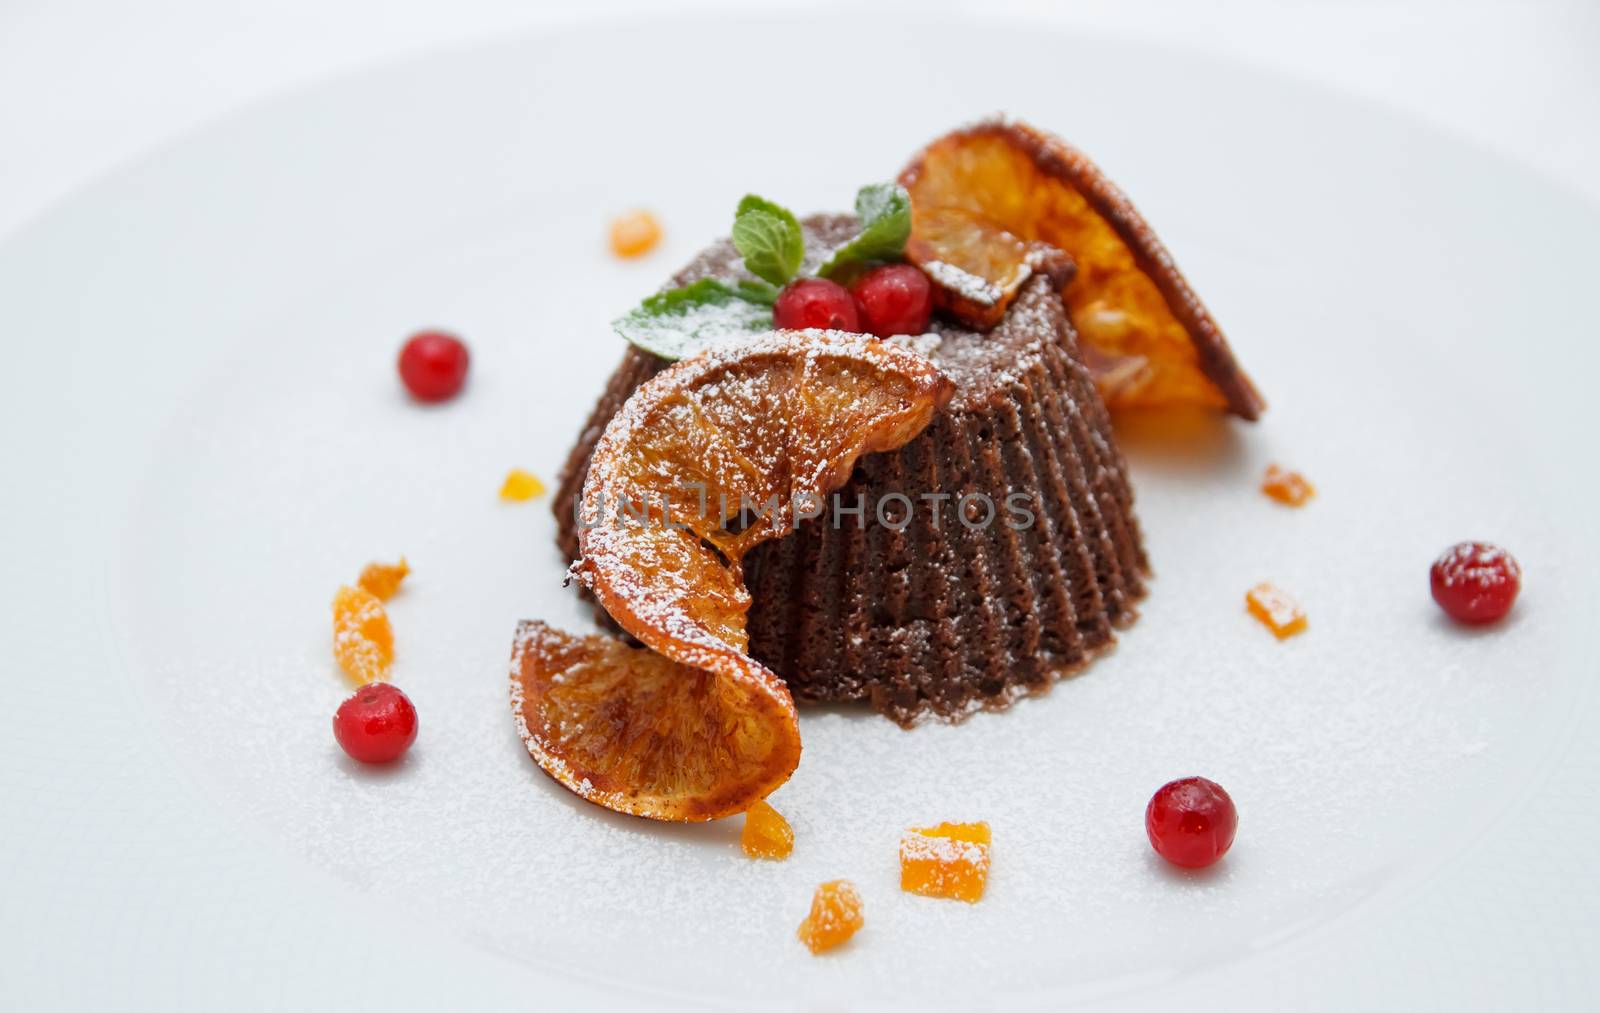 Chocolate orange cupcake decorated with fresh berries, sliced orange, mint on white plate